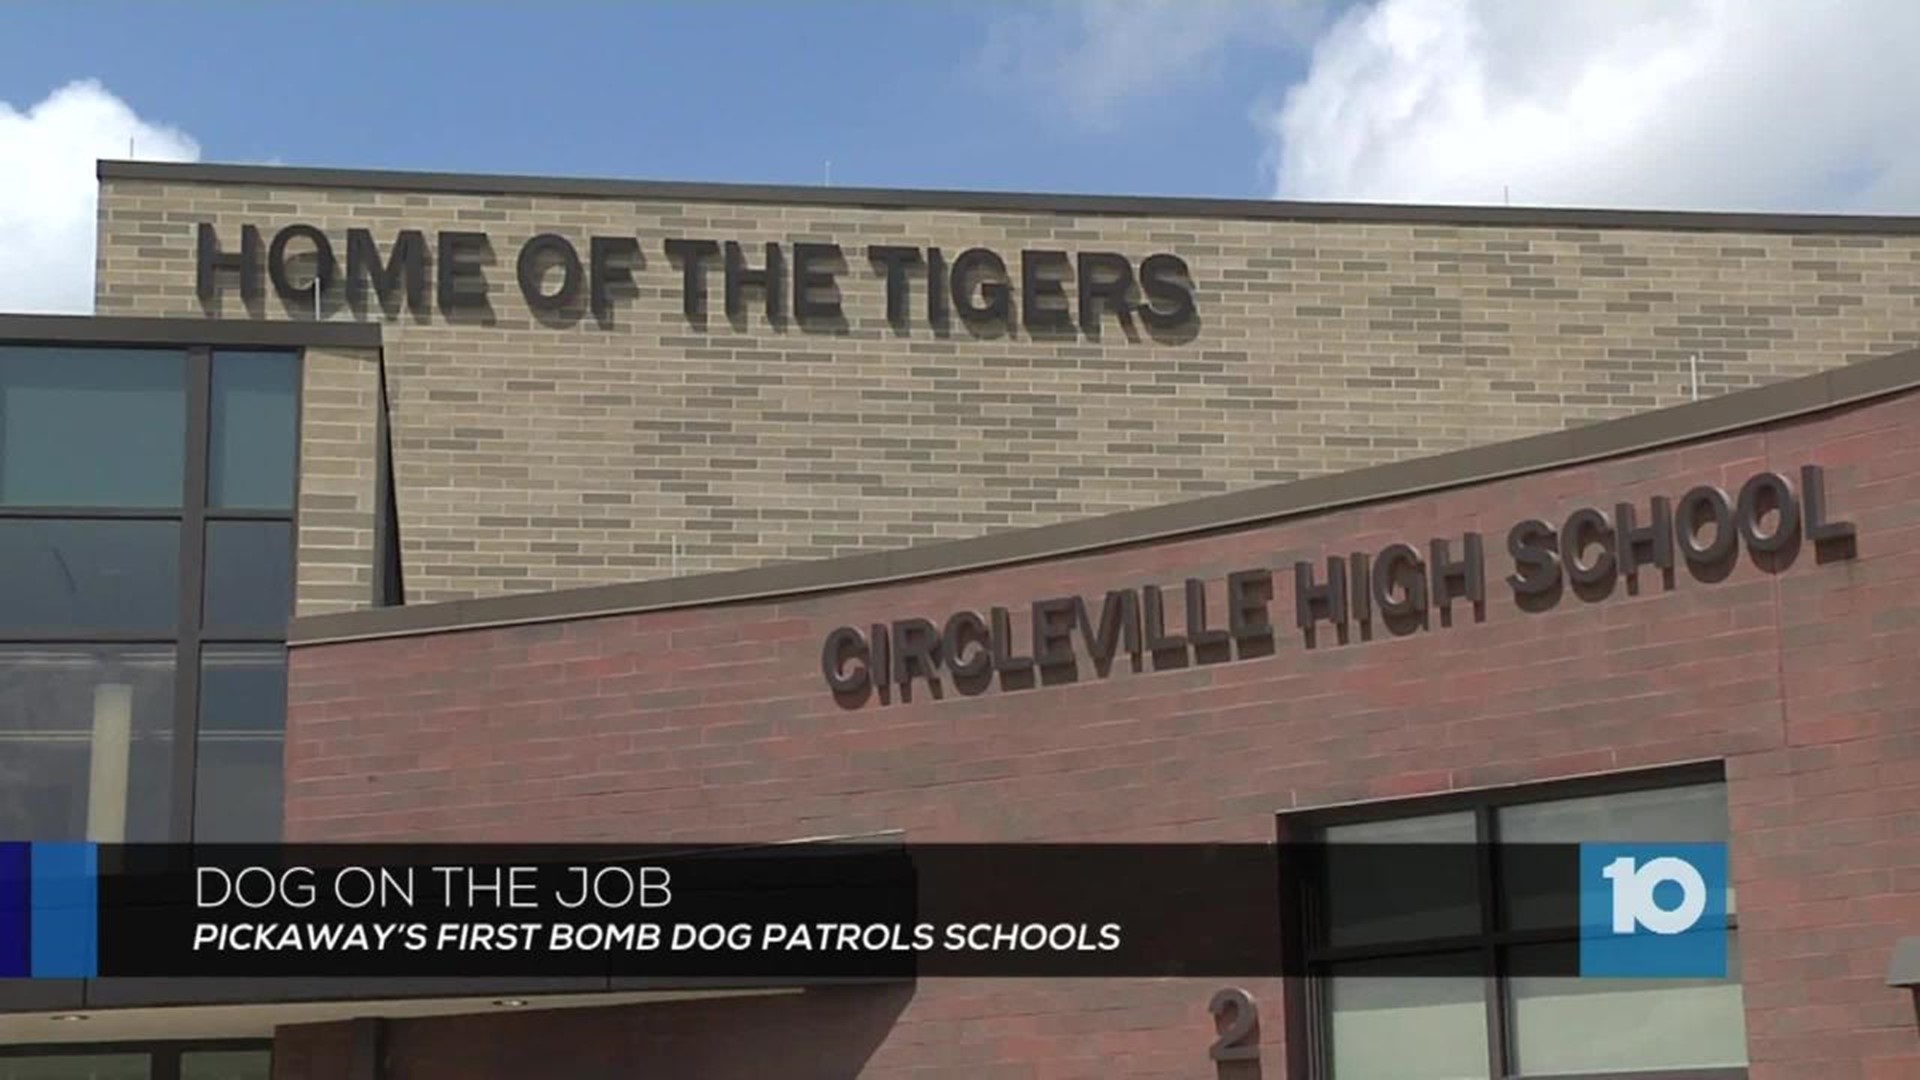 Pickaway County's first bomb dog patrols schools